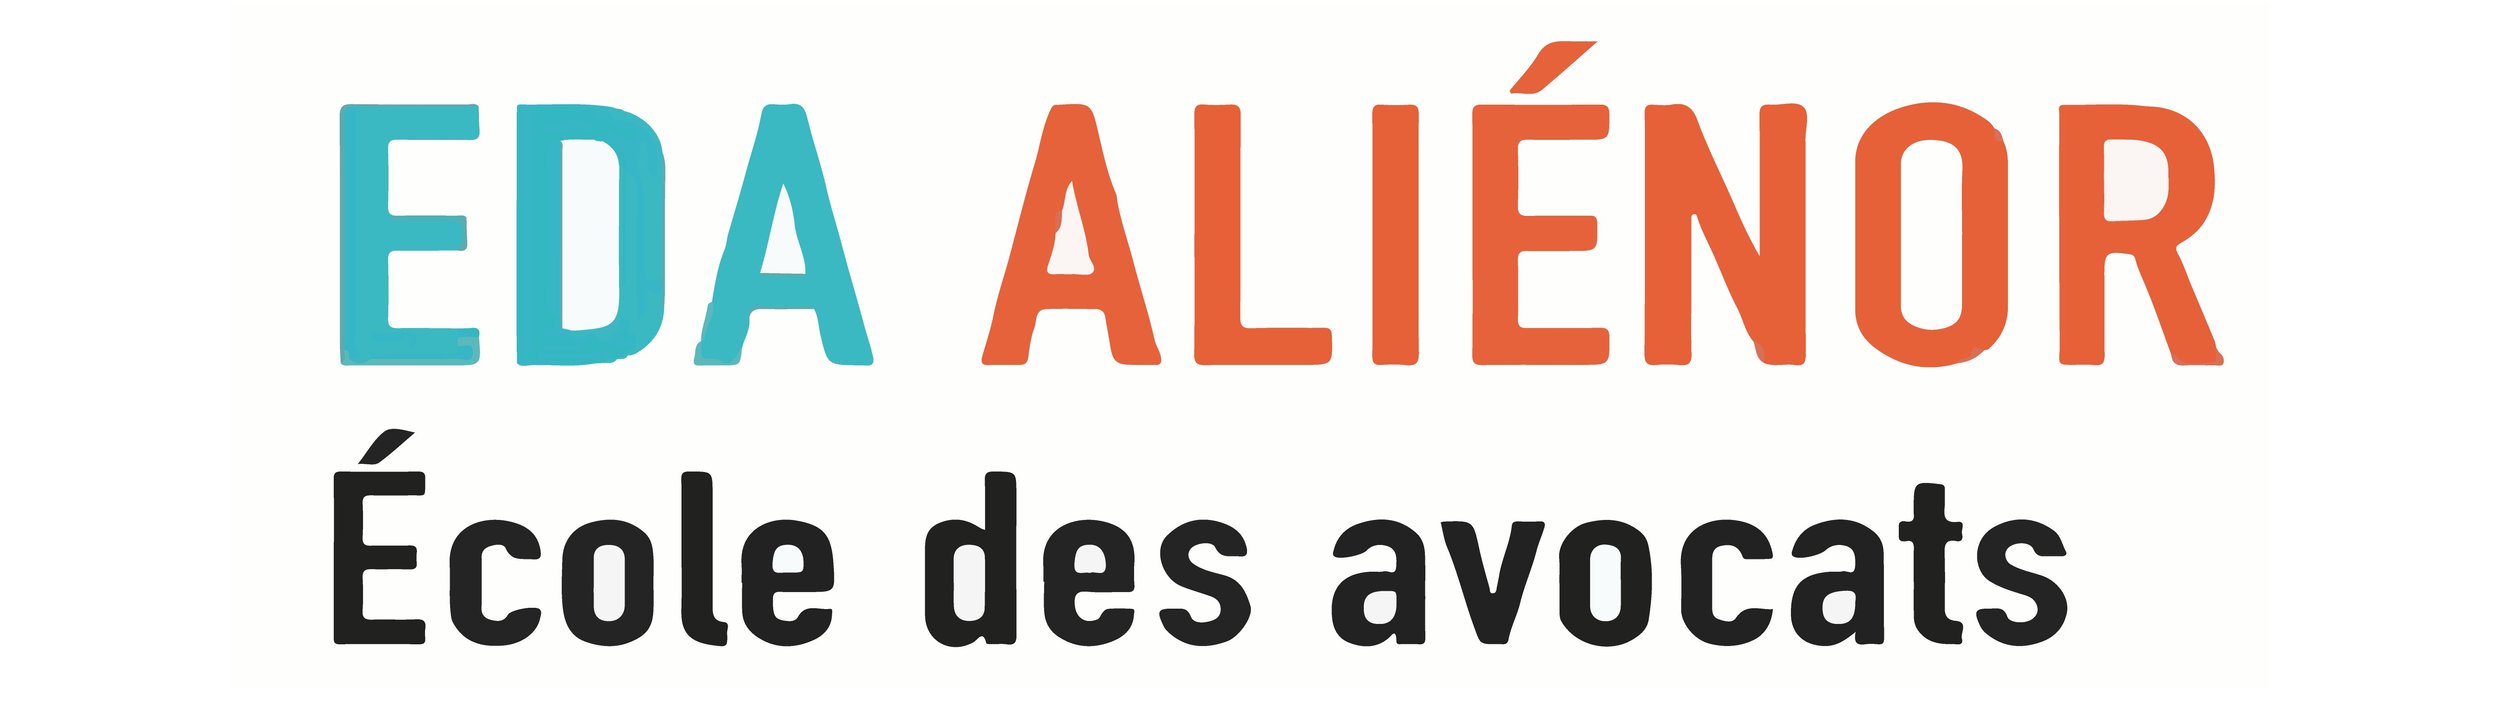 eda_alienor_ecole_des_avocats_alienor_cover.jpg